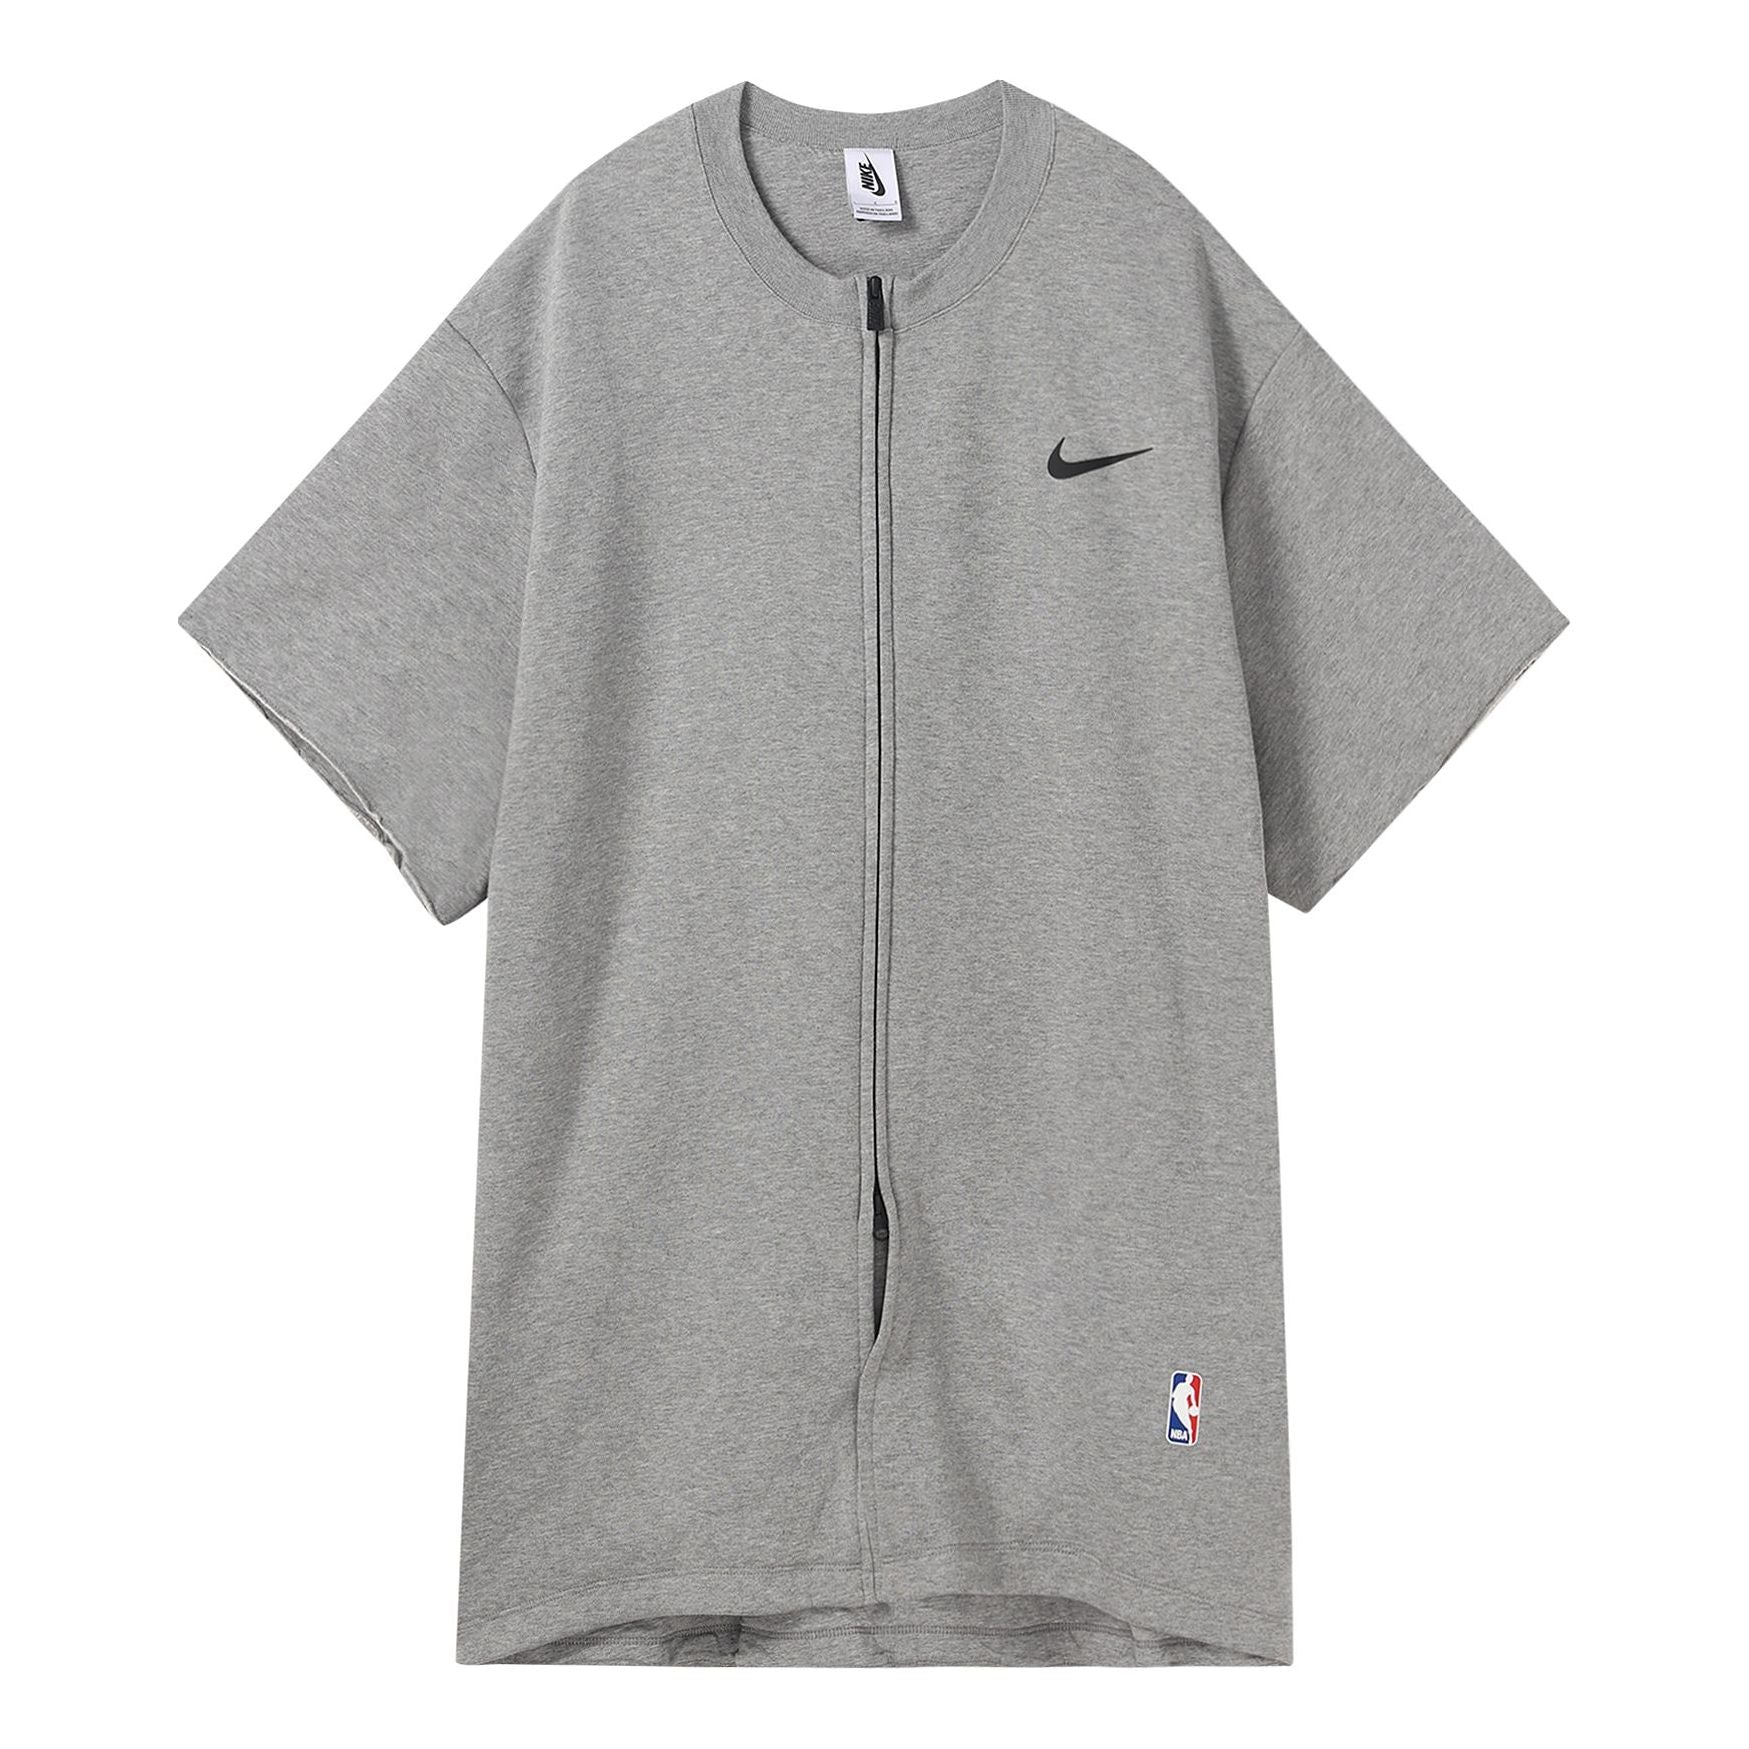 Men's Nike NRG Ti Warm Up Top x Fear of God FOG Gray Zipper Short Sleeve  Tops 'Dark Grey Heather Black' AR0629-063